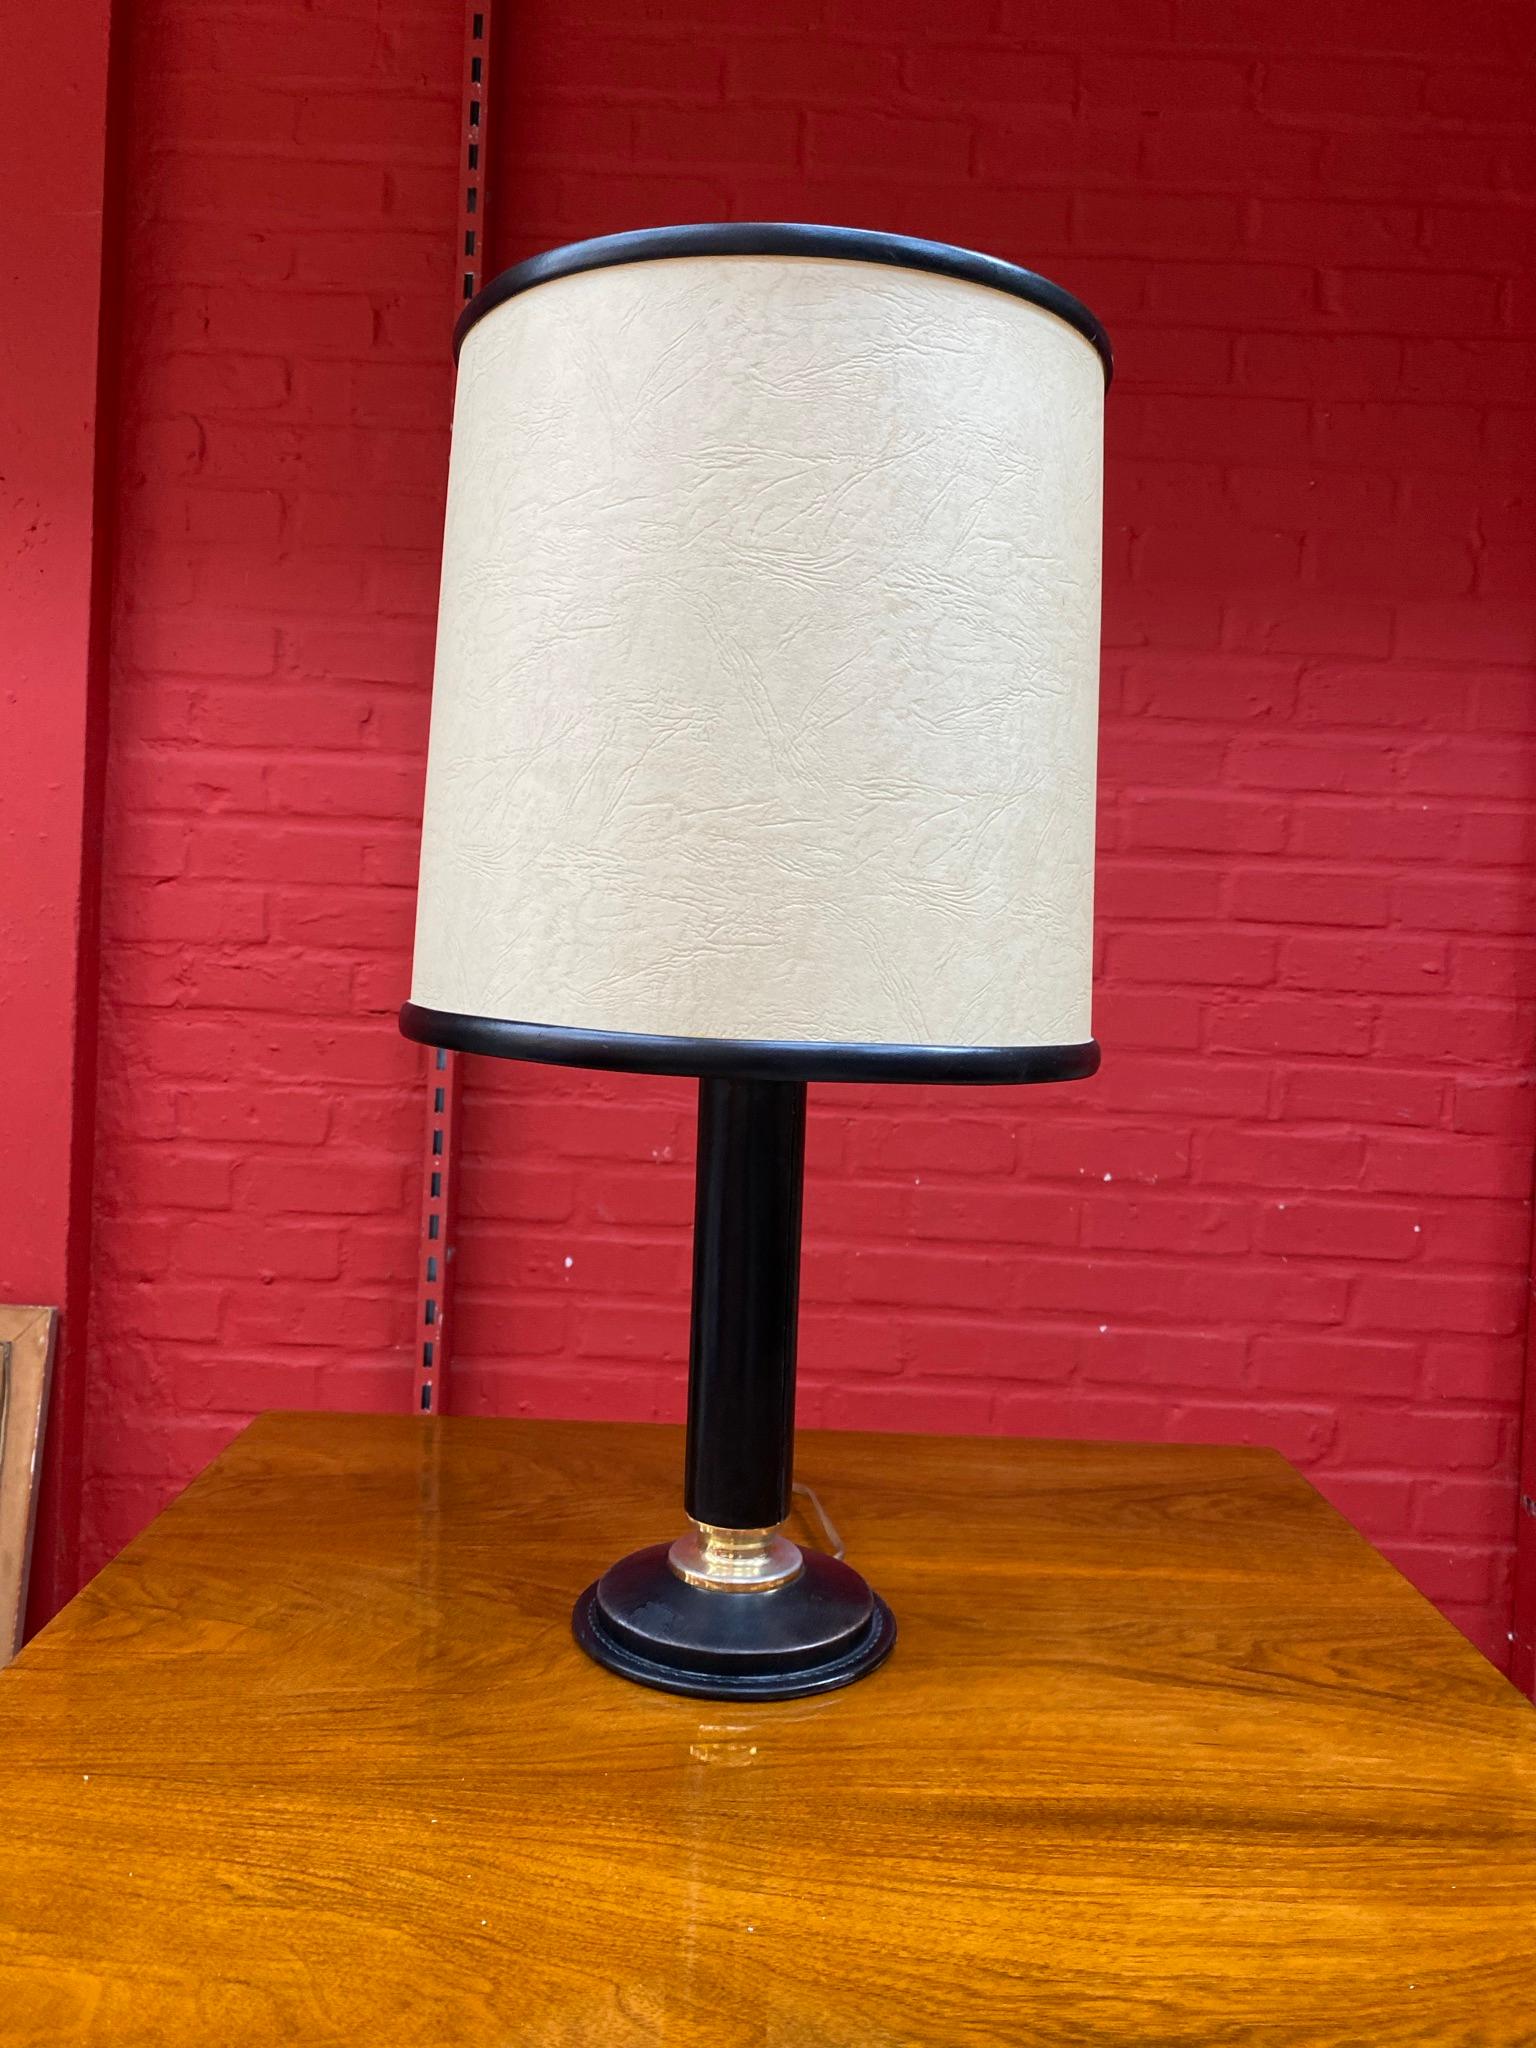 Lederlampe im Stil von Jacques Adnet, um 1950, originaler Lampenschirm in gutem Zustand.
 